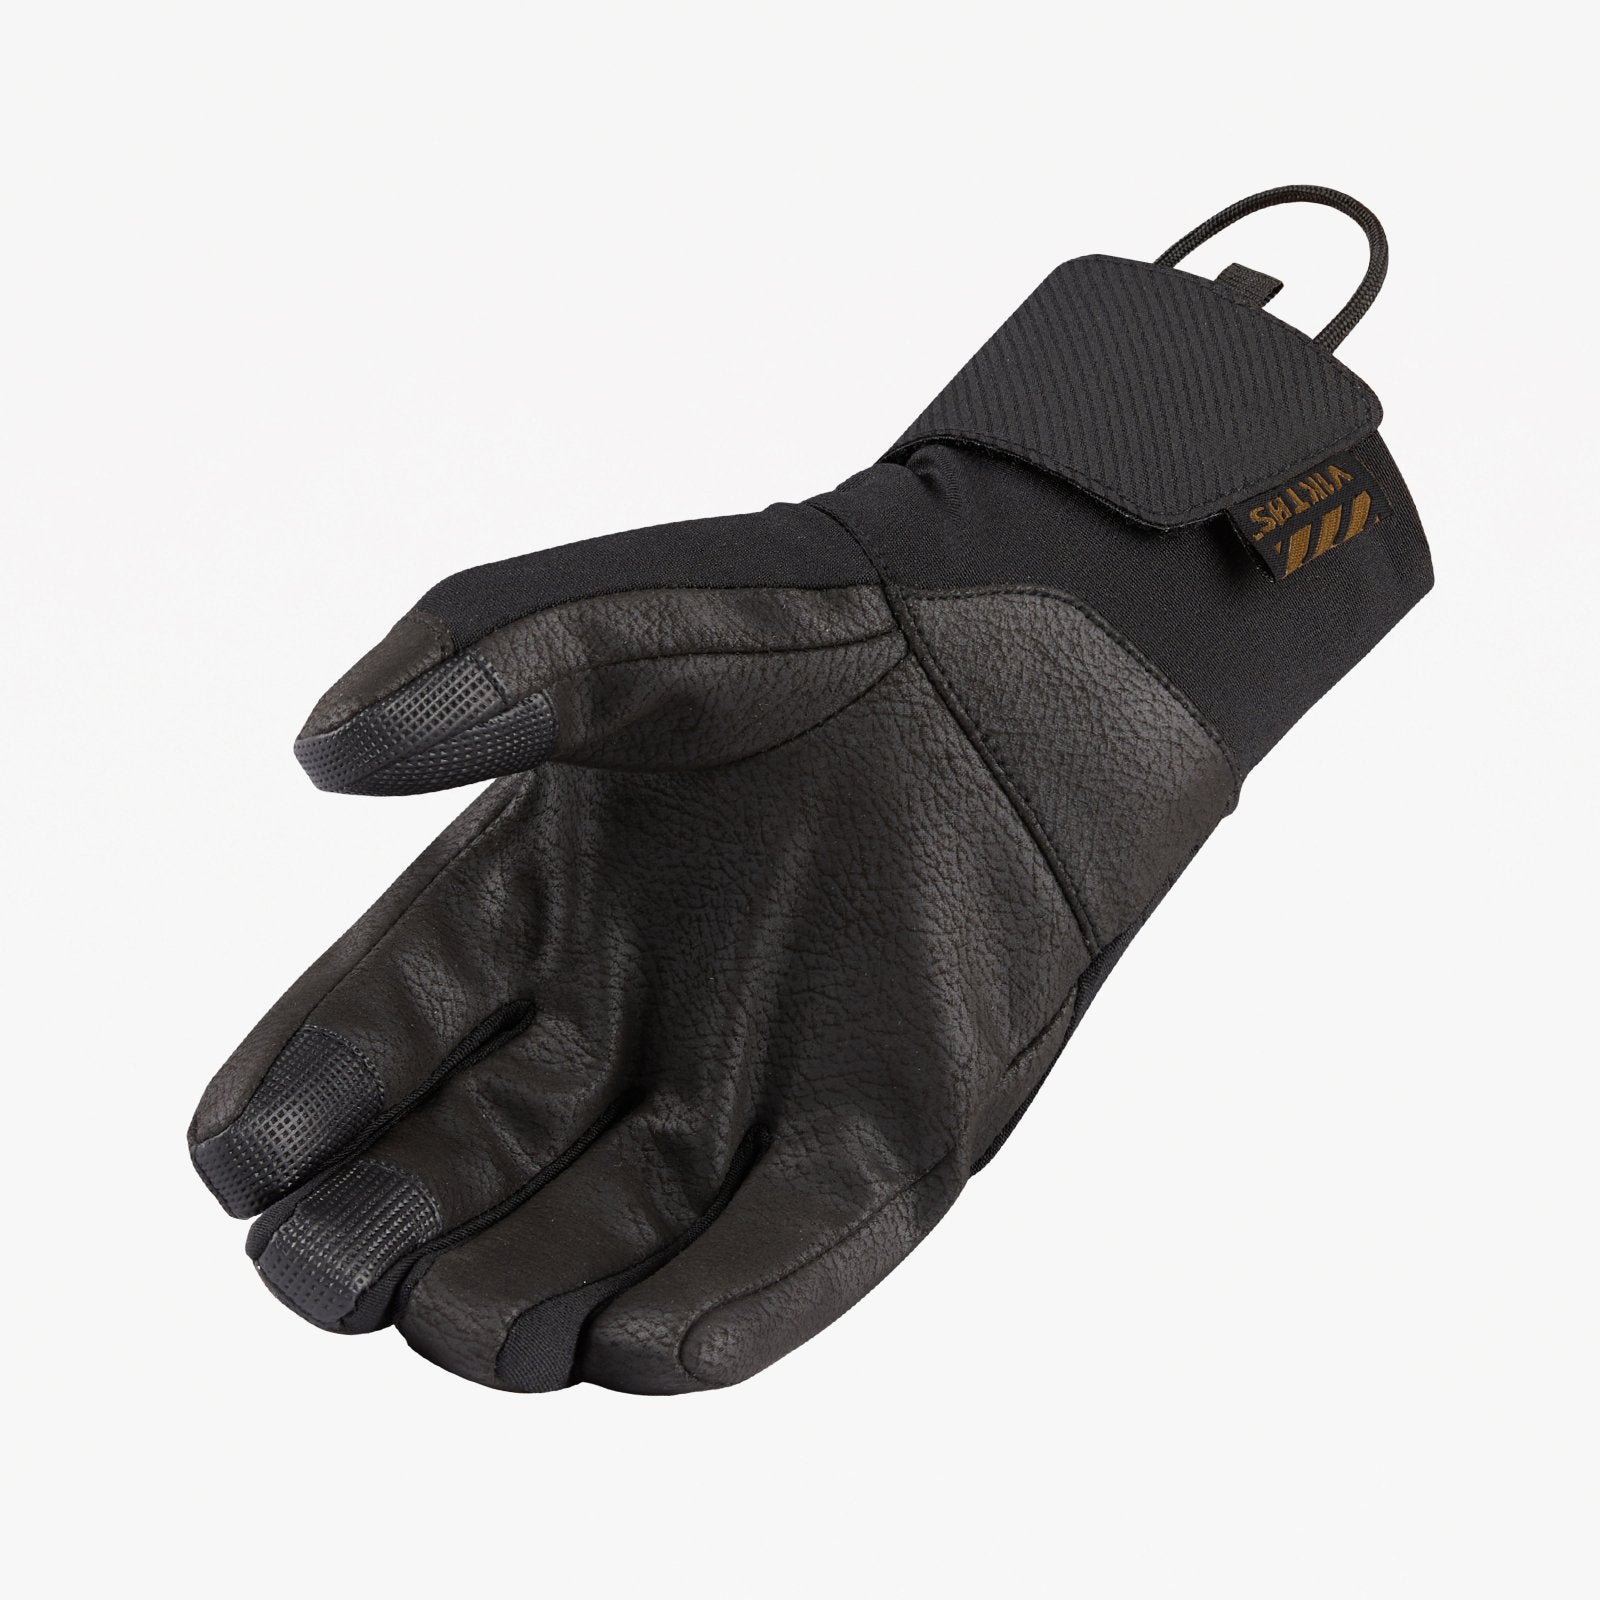 VIKTOS Zerodarker Glove Nightfjall Gloves VIKTOS Extra Small Tactical Gear Supplier Tactical Distributors Australia